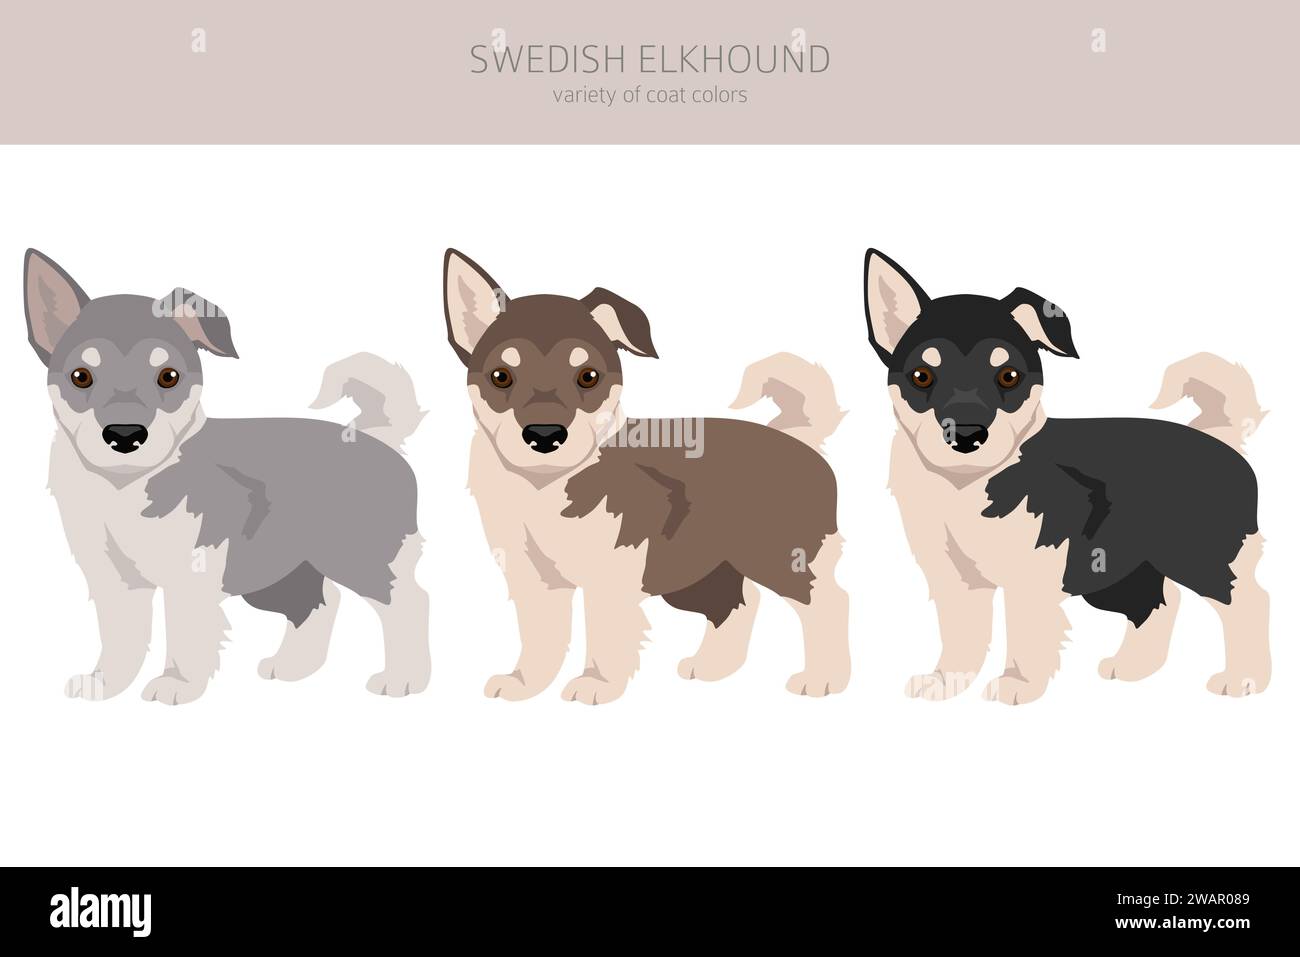 Swedish Elkhound puppies clipart. All coat colors set.  All dog breeds characteristics infographic. Vector illustration Stock Vector